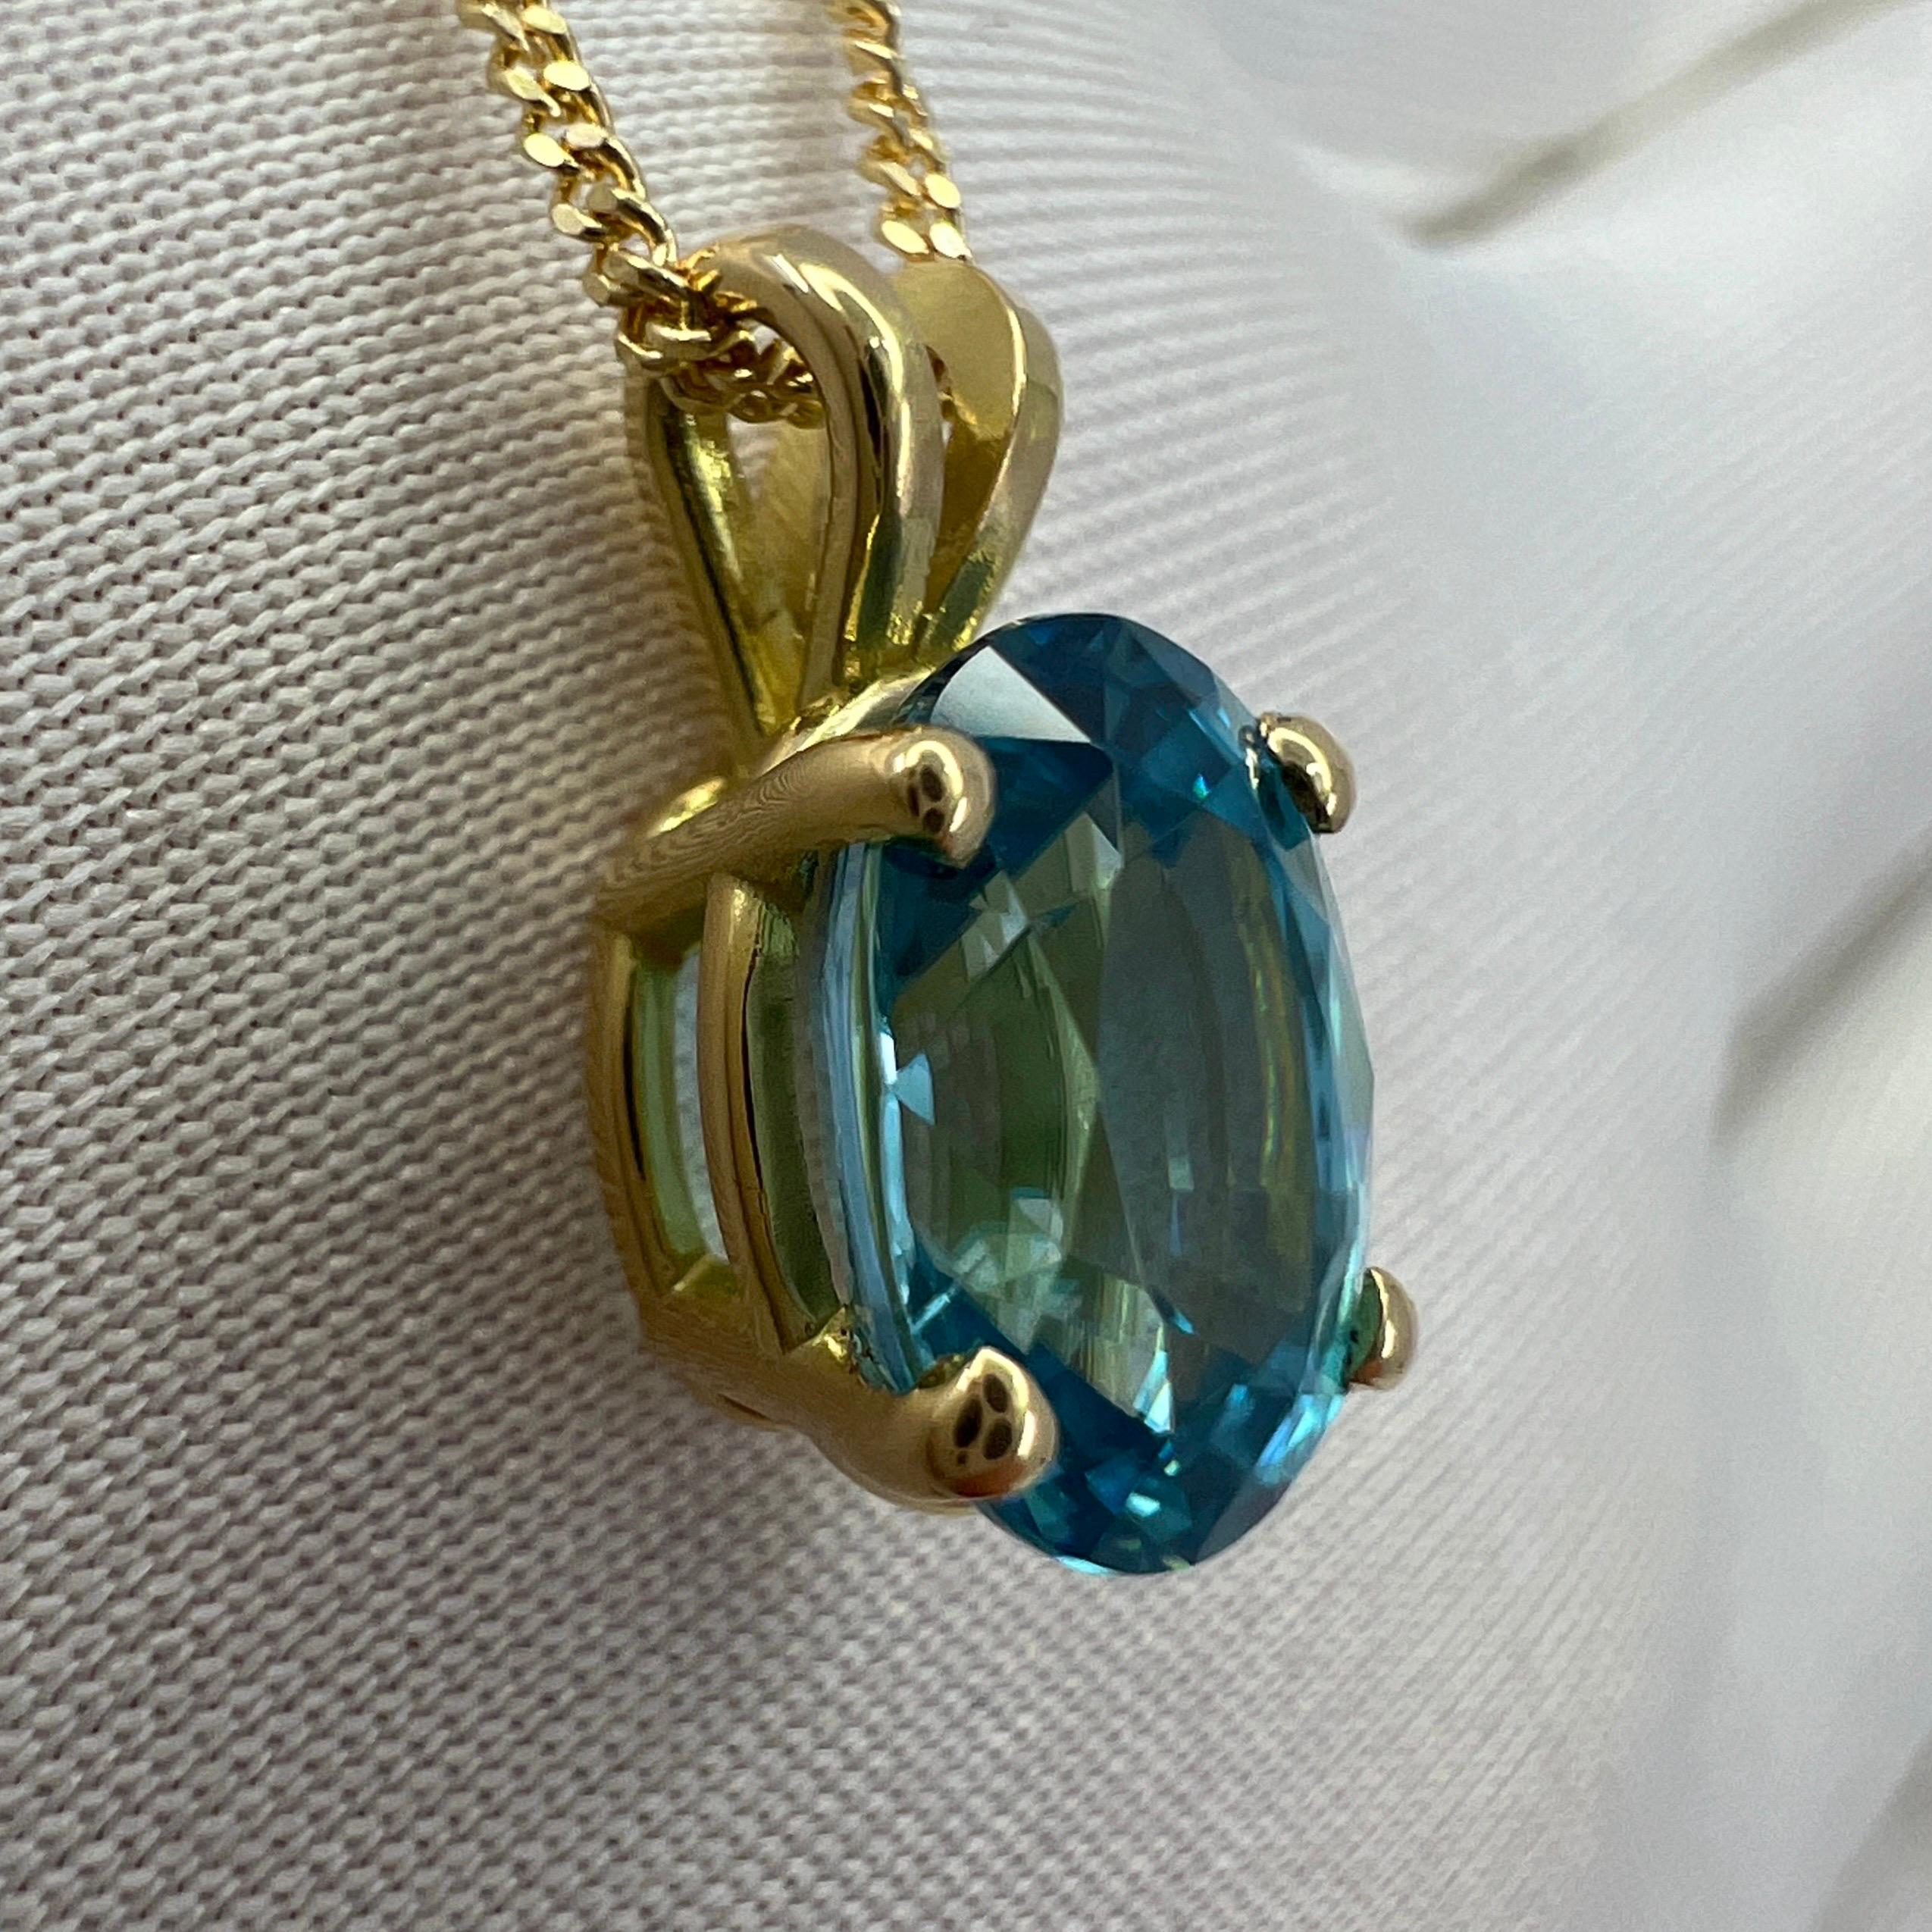 Vivid Neon Blue Zircon 3.10 Carat Oval Cut 18k Yellow Gold Pendant Necklace For Sale 1